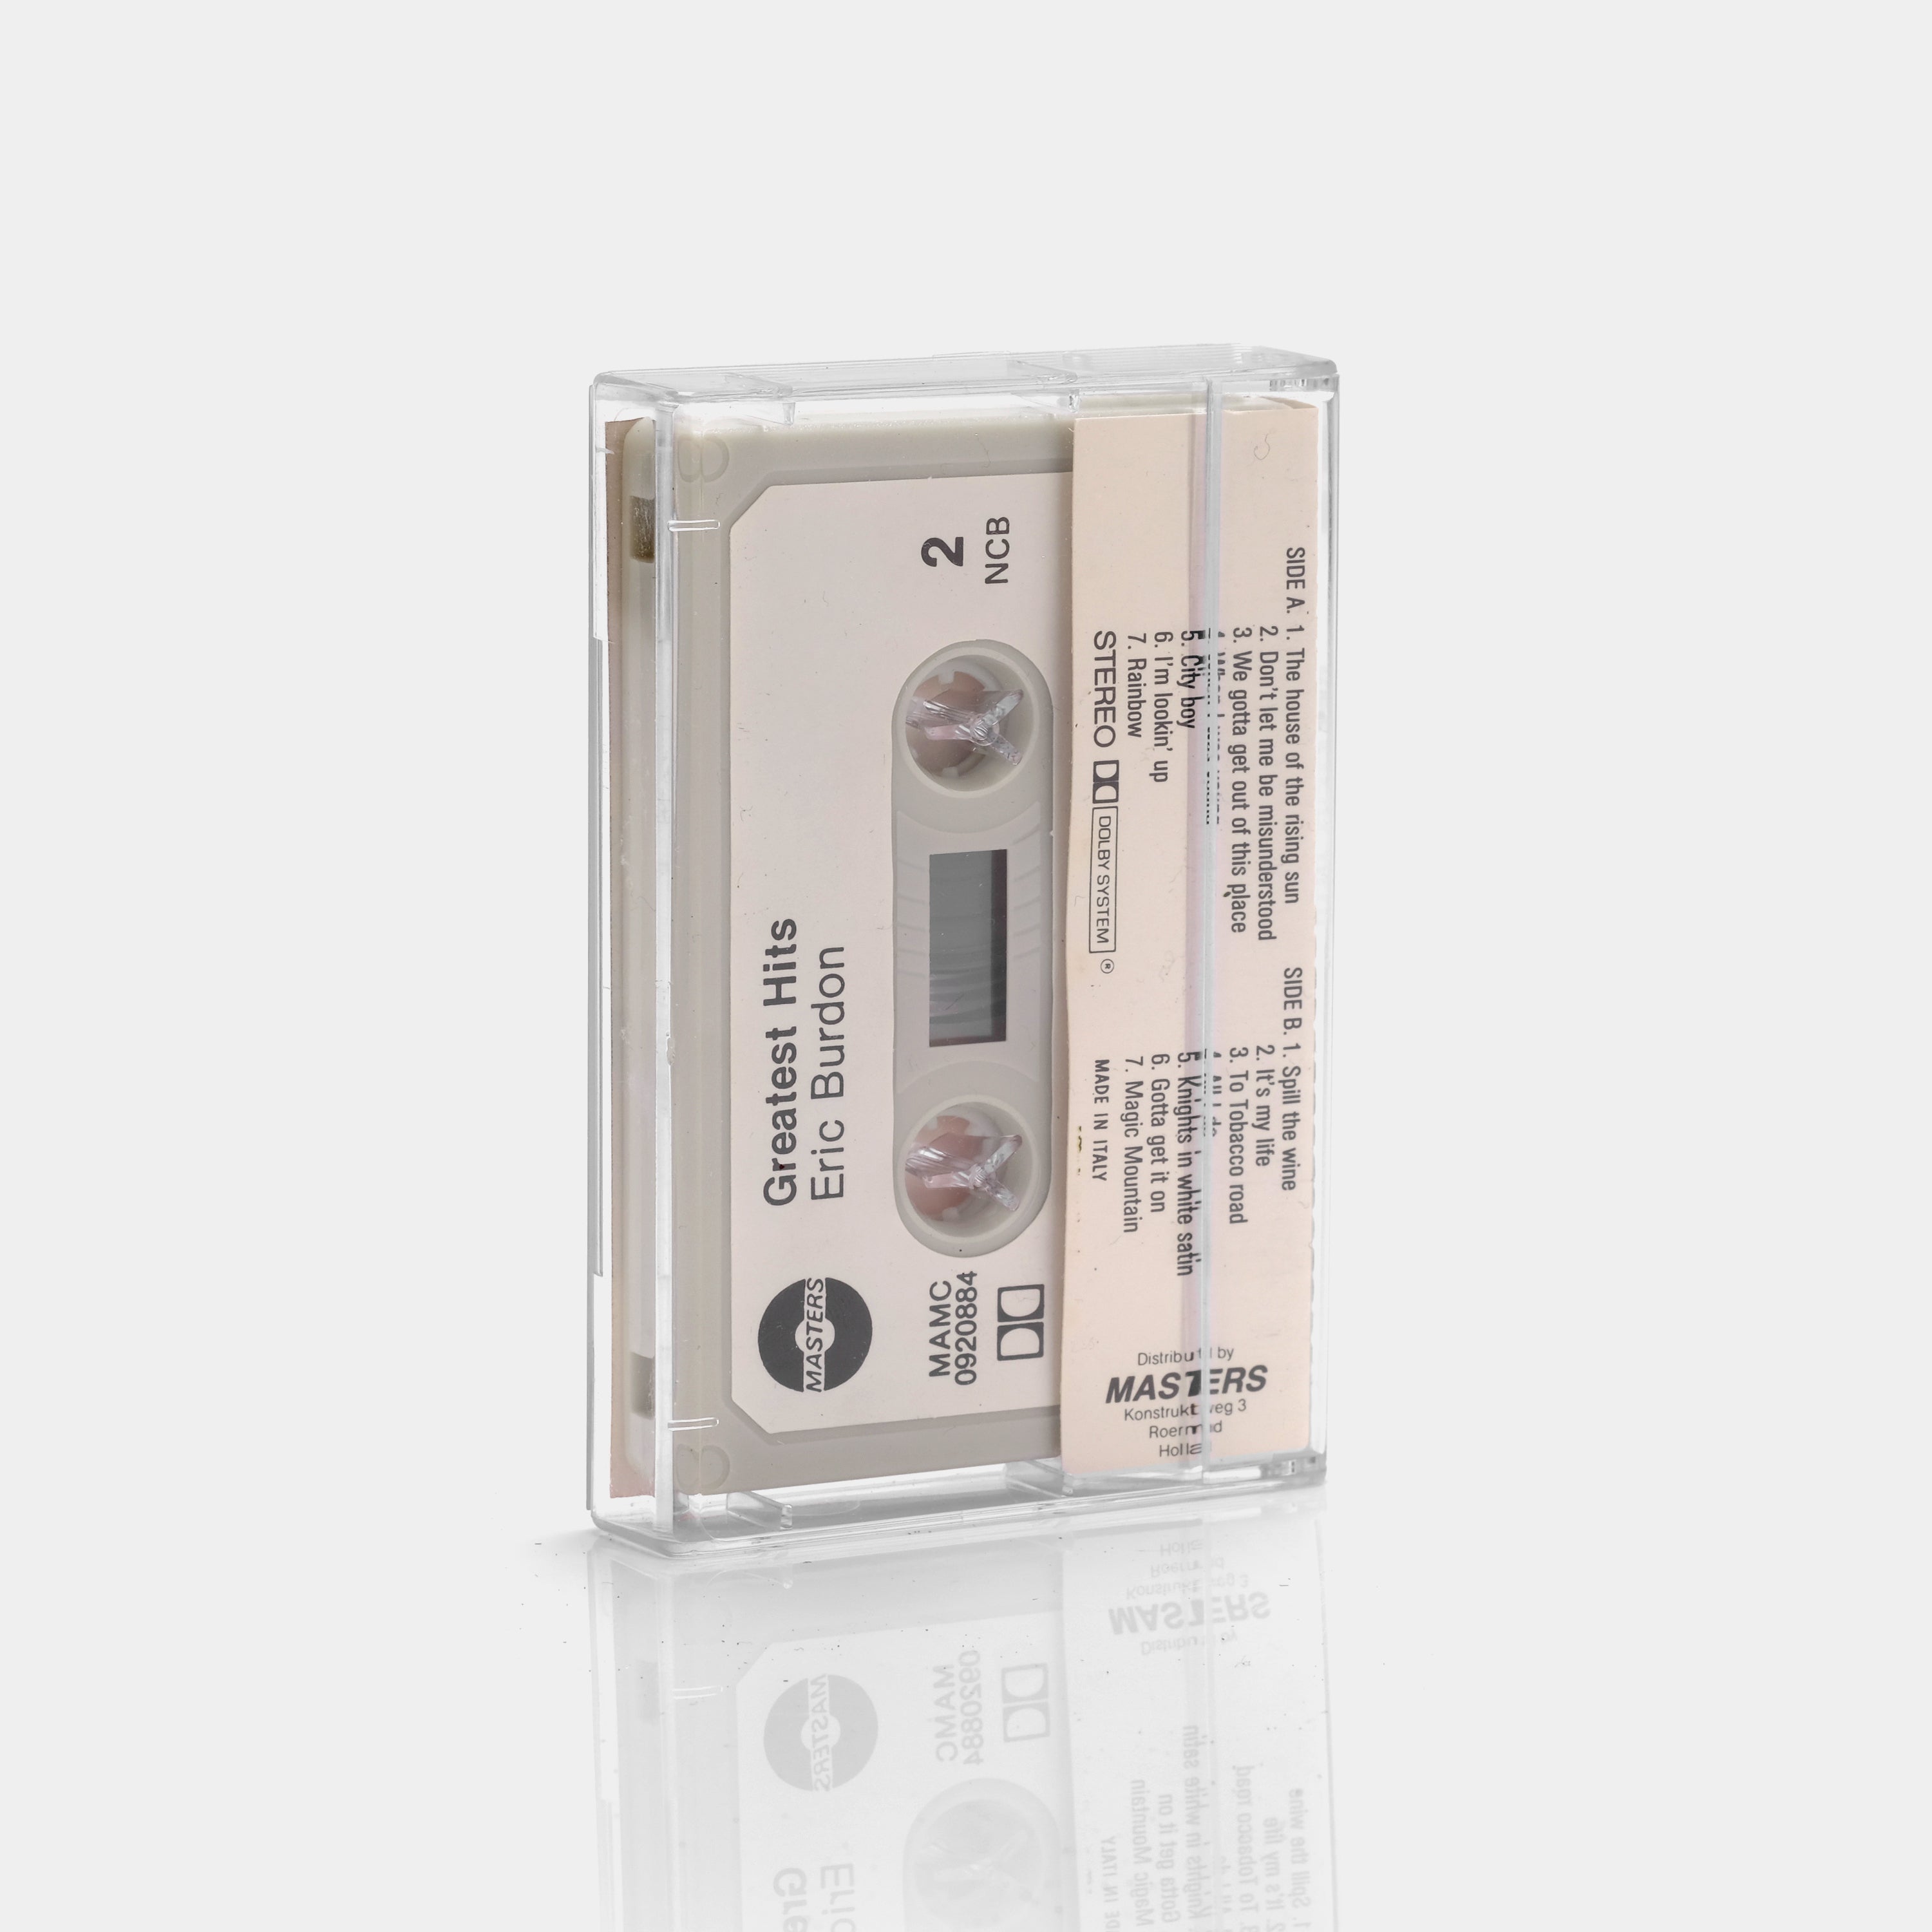 Eric Burdon - Greatest Hits Cassette Tape